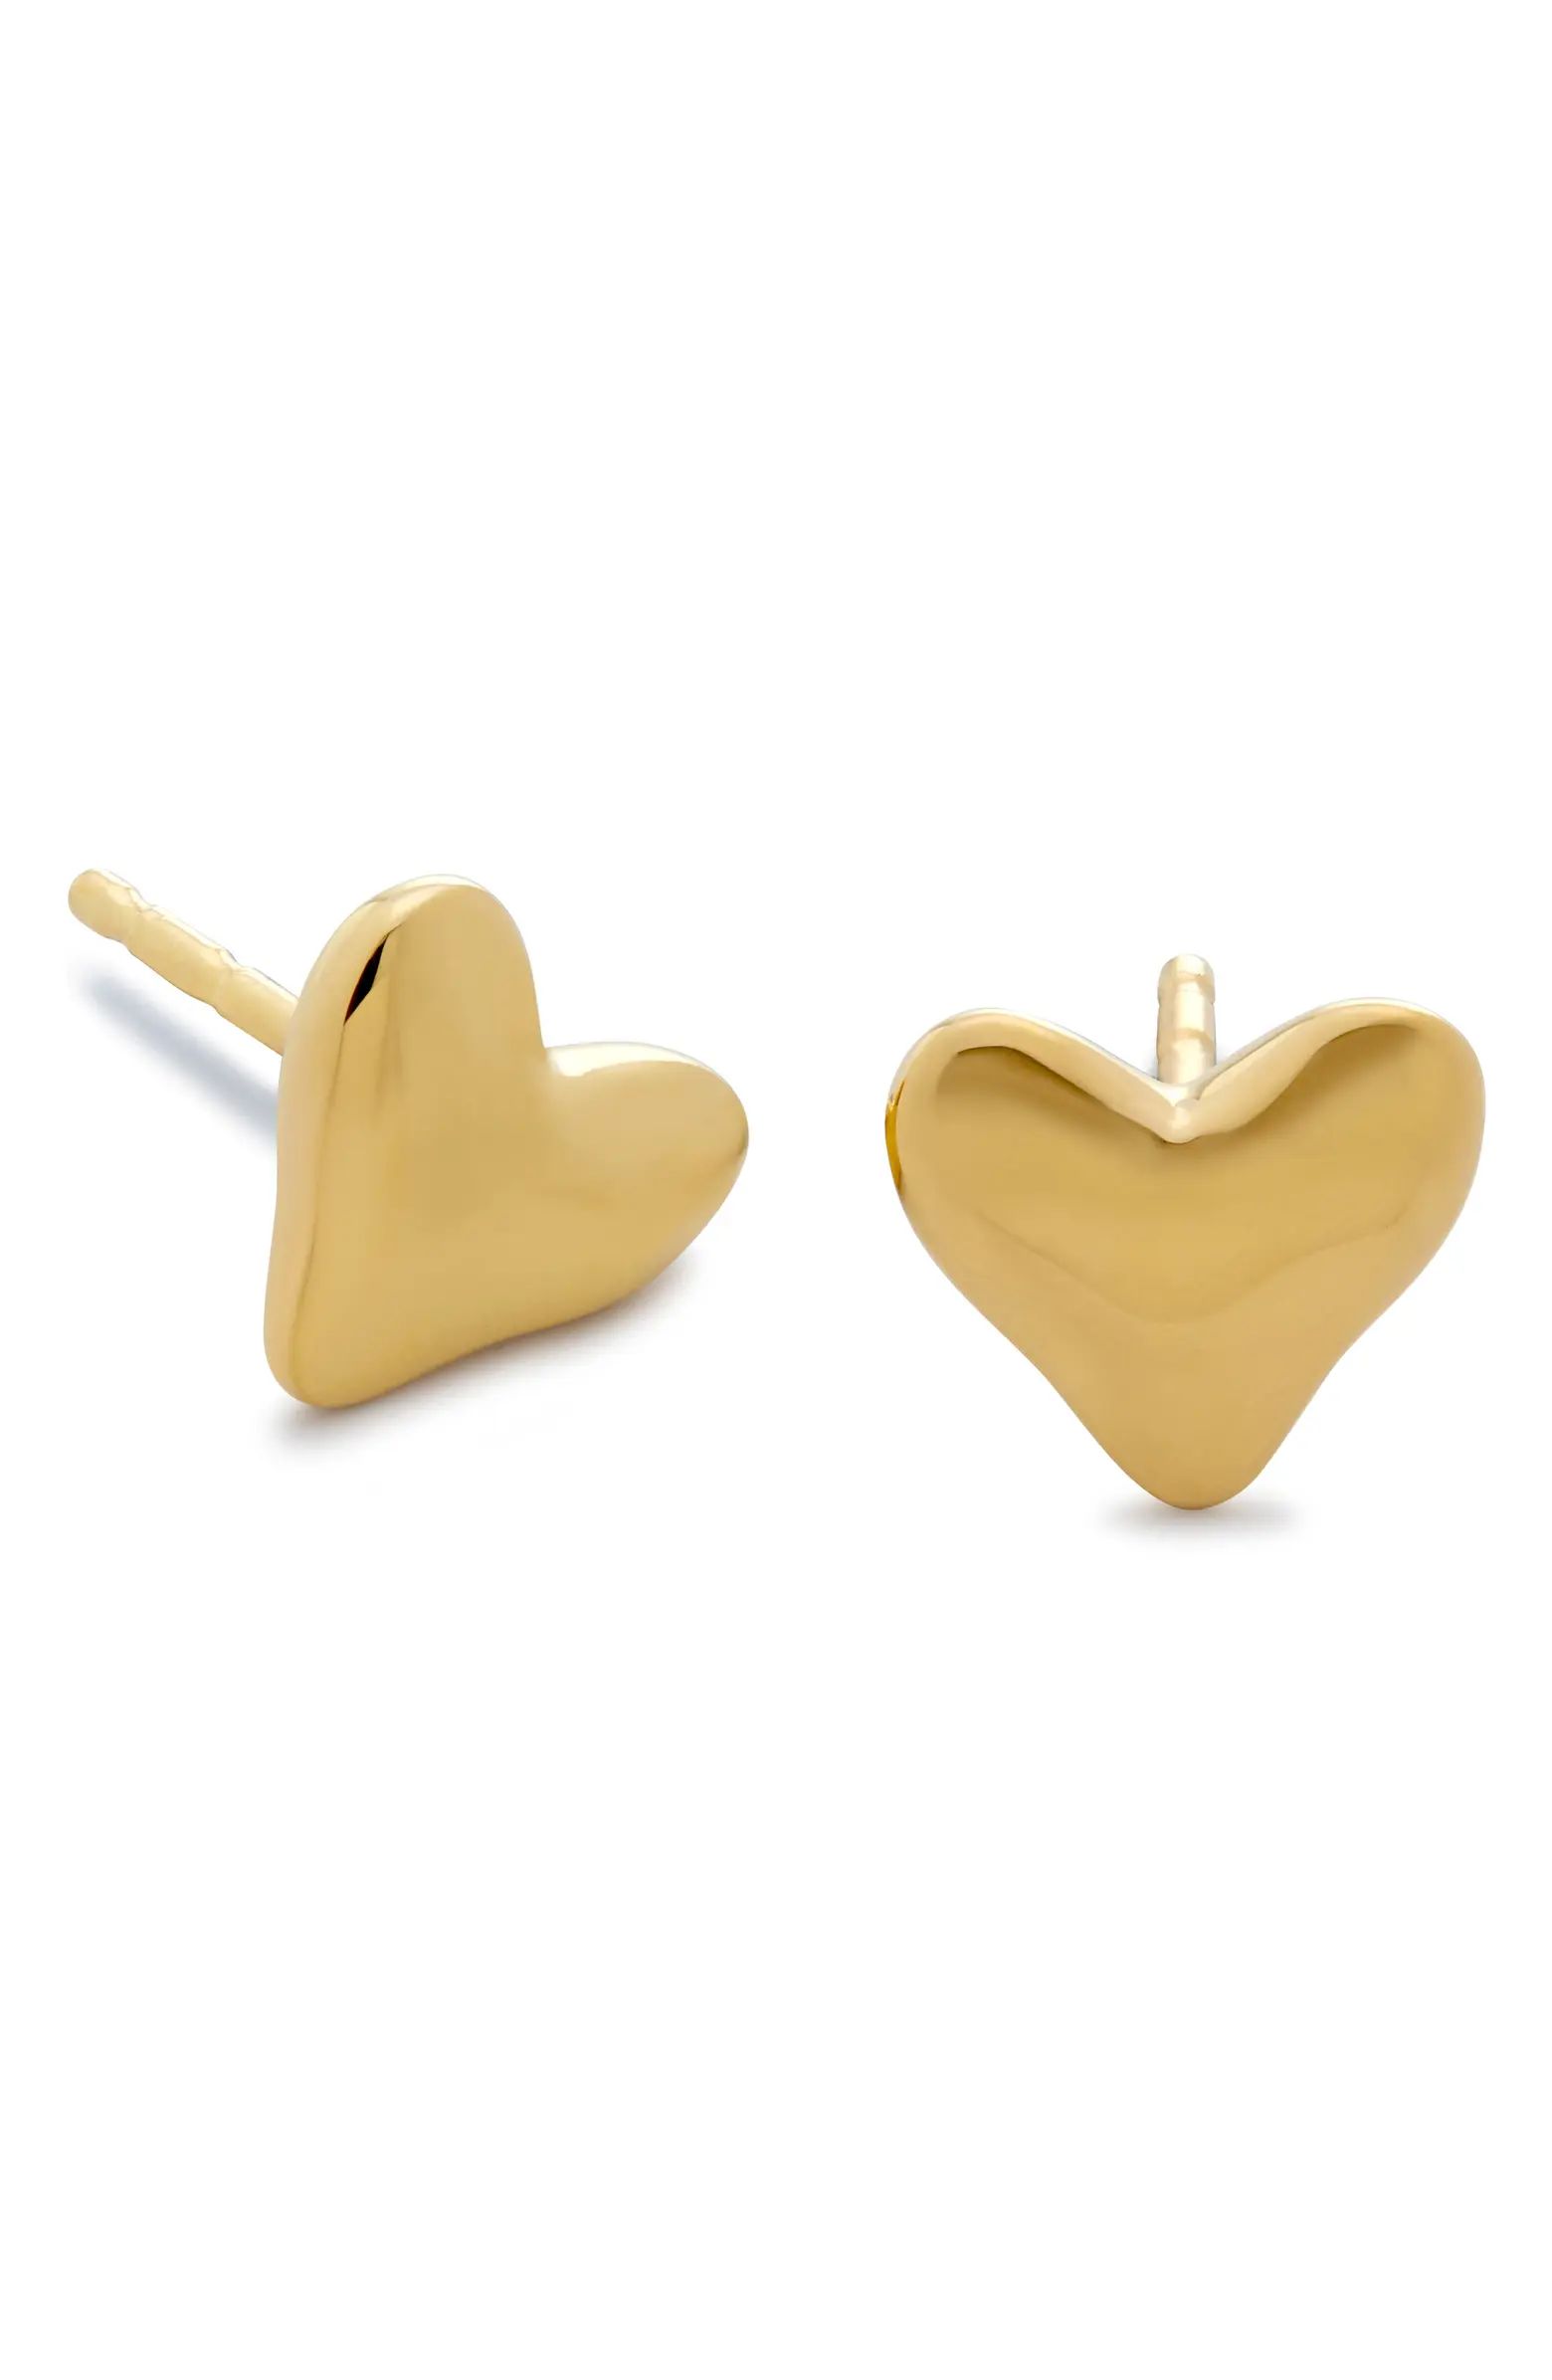 Heart Stud Earrings | Nordstrom